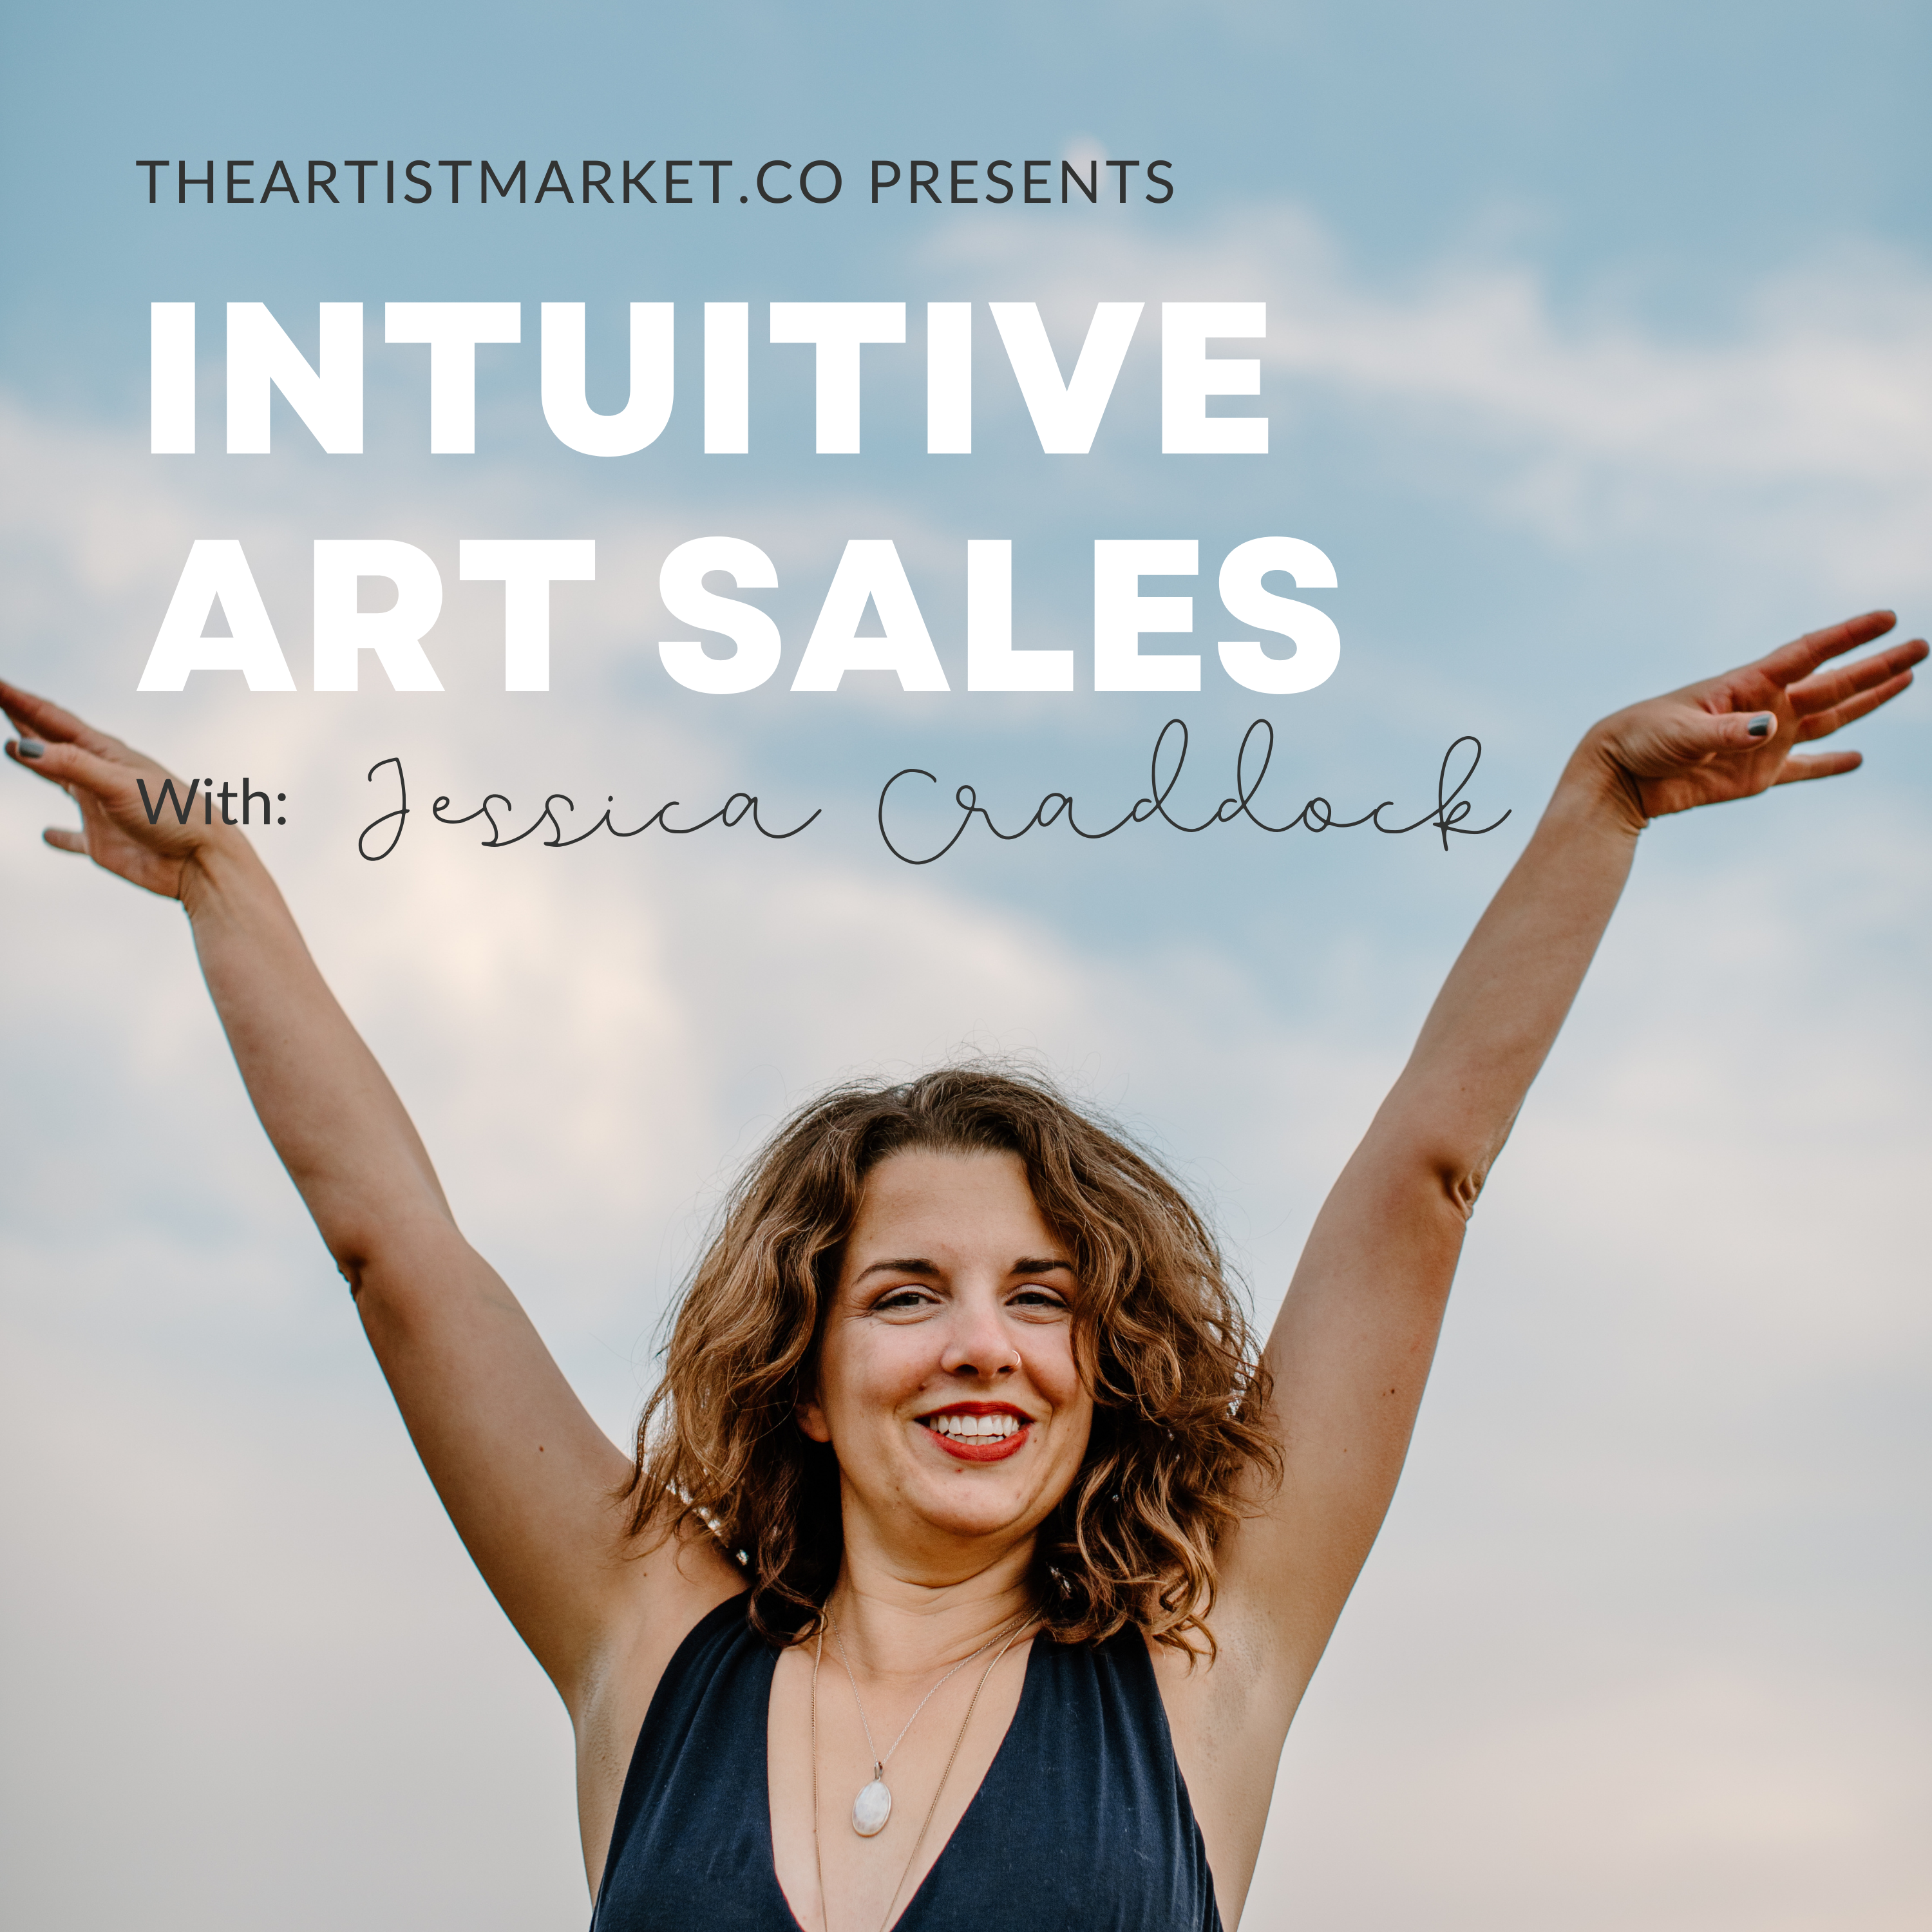 Intuitive Art Sales with Jessica Craddock